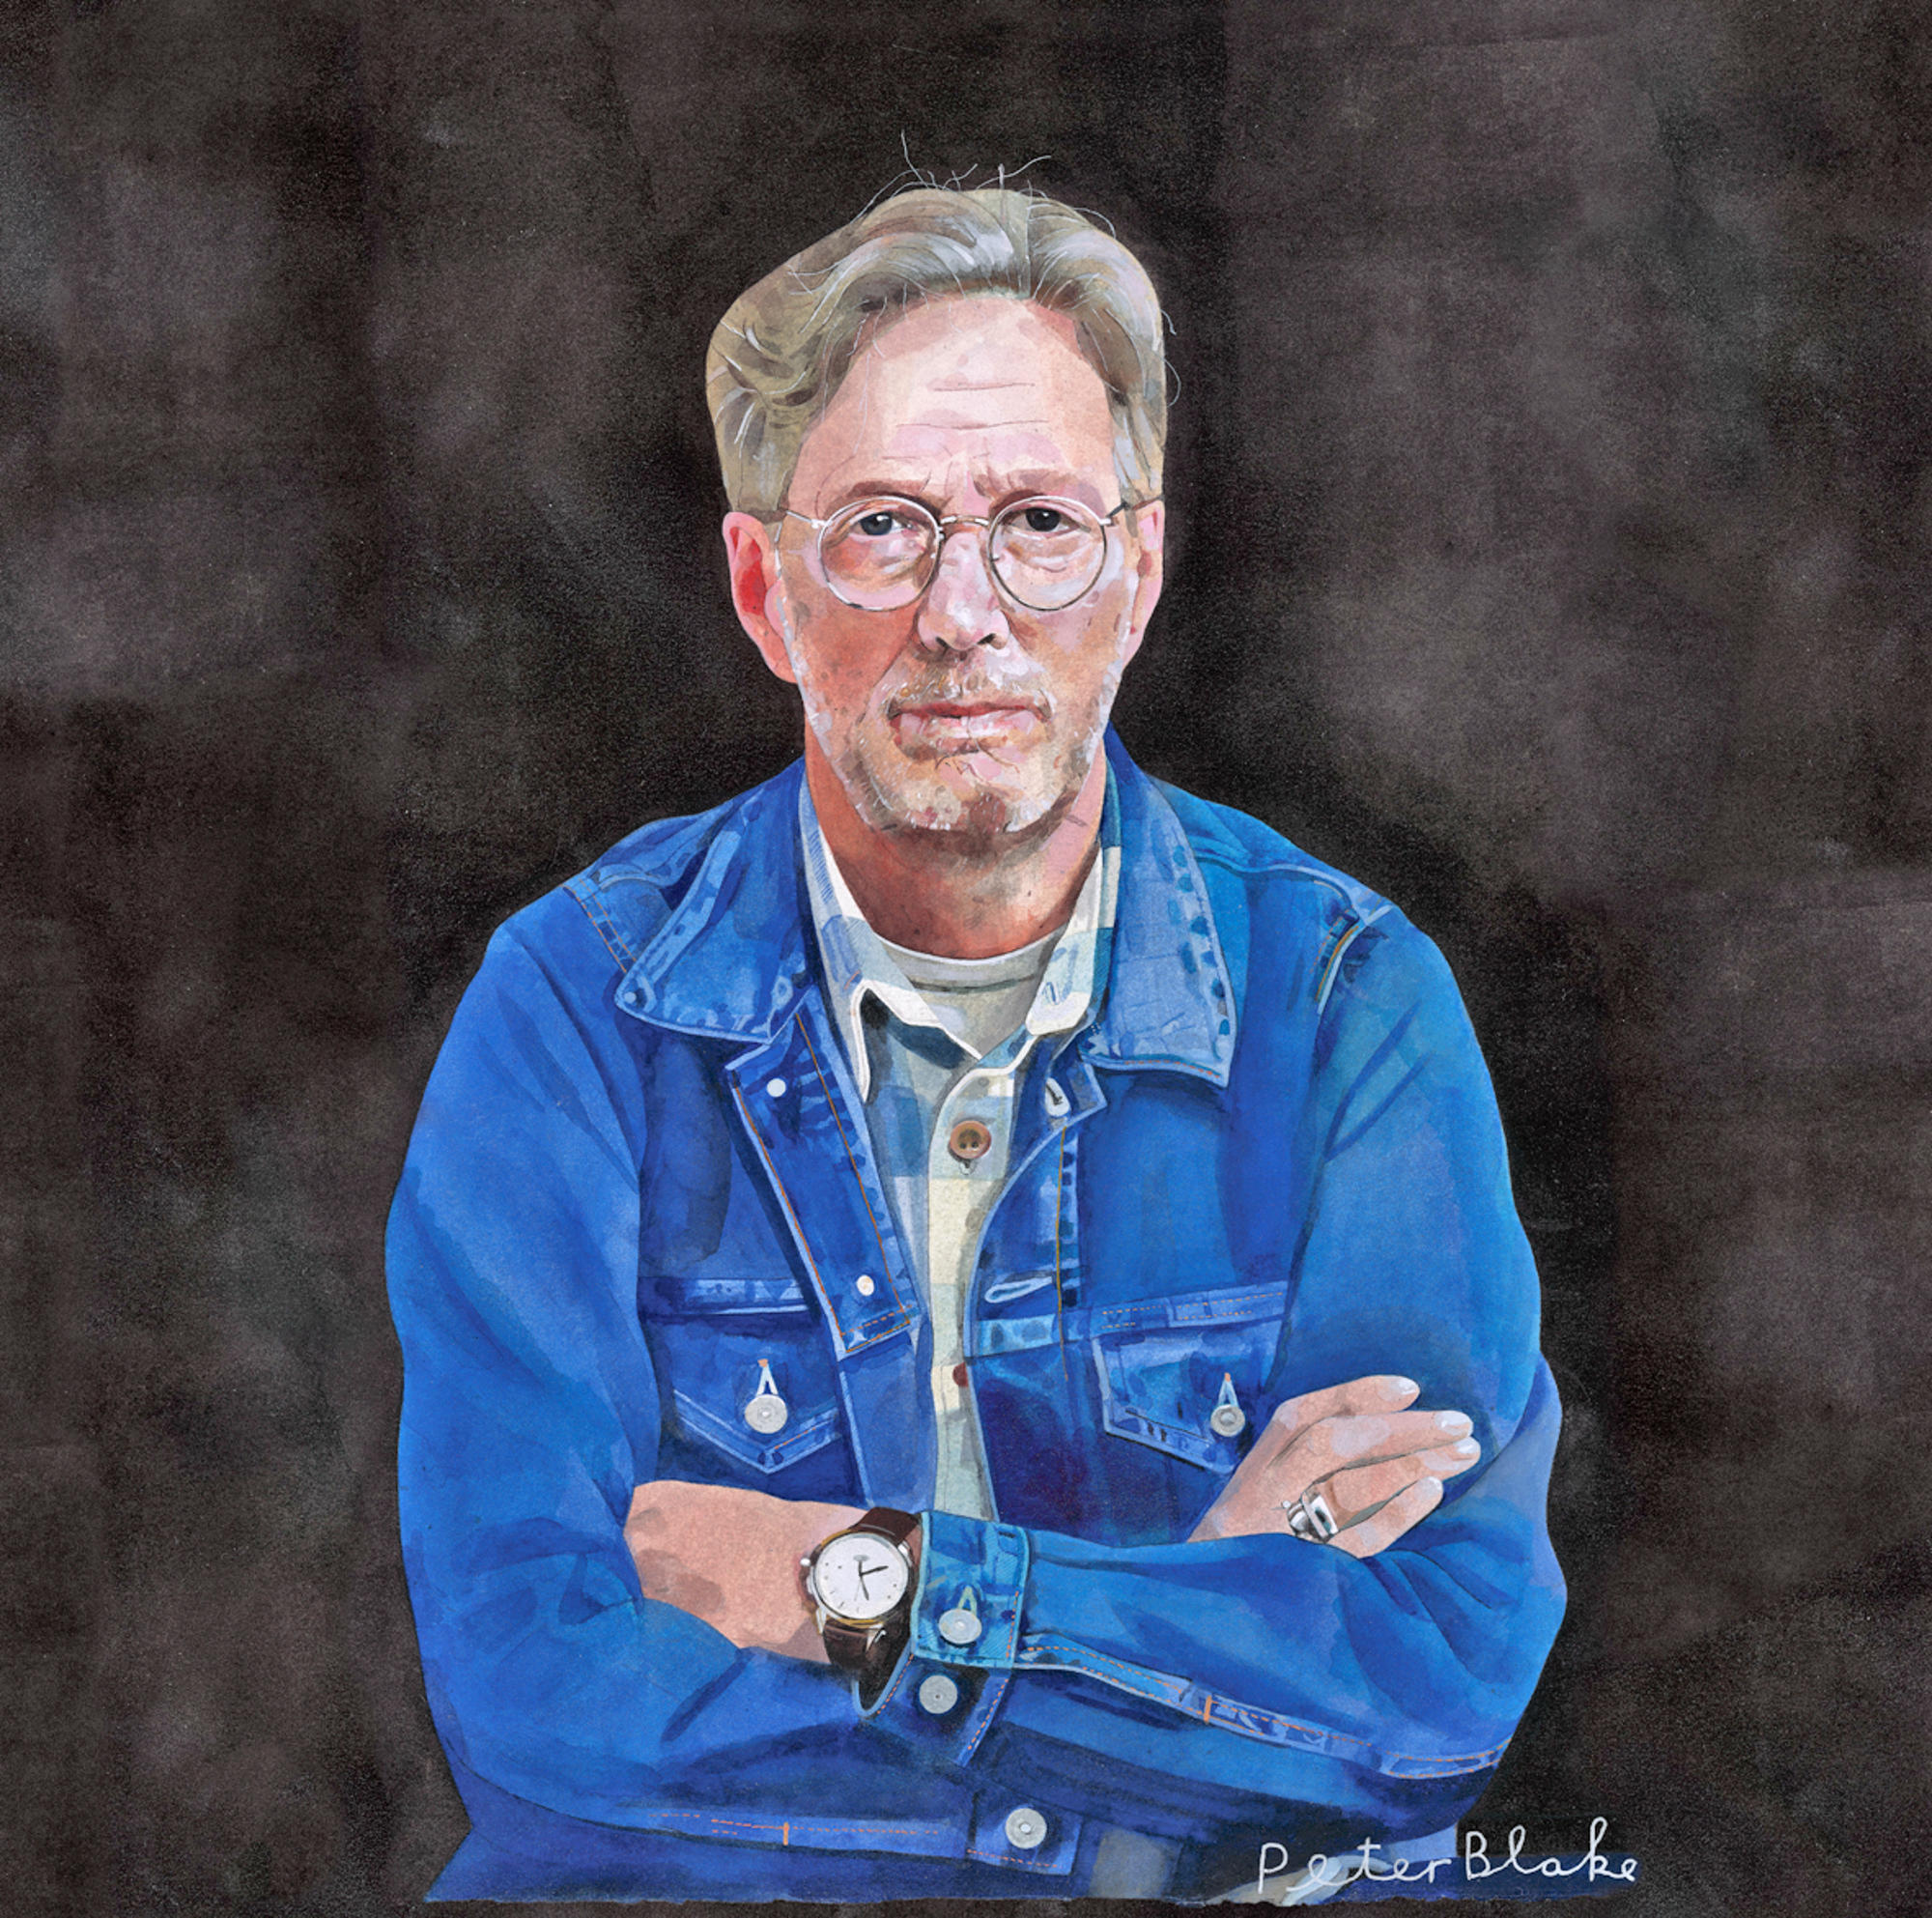 Do (CD) I Eric - Still Clapton -